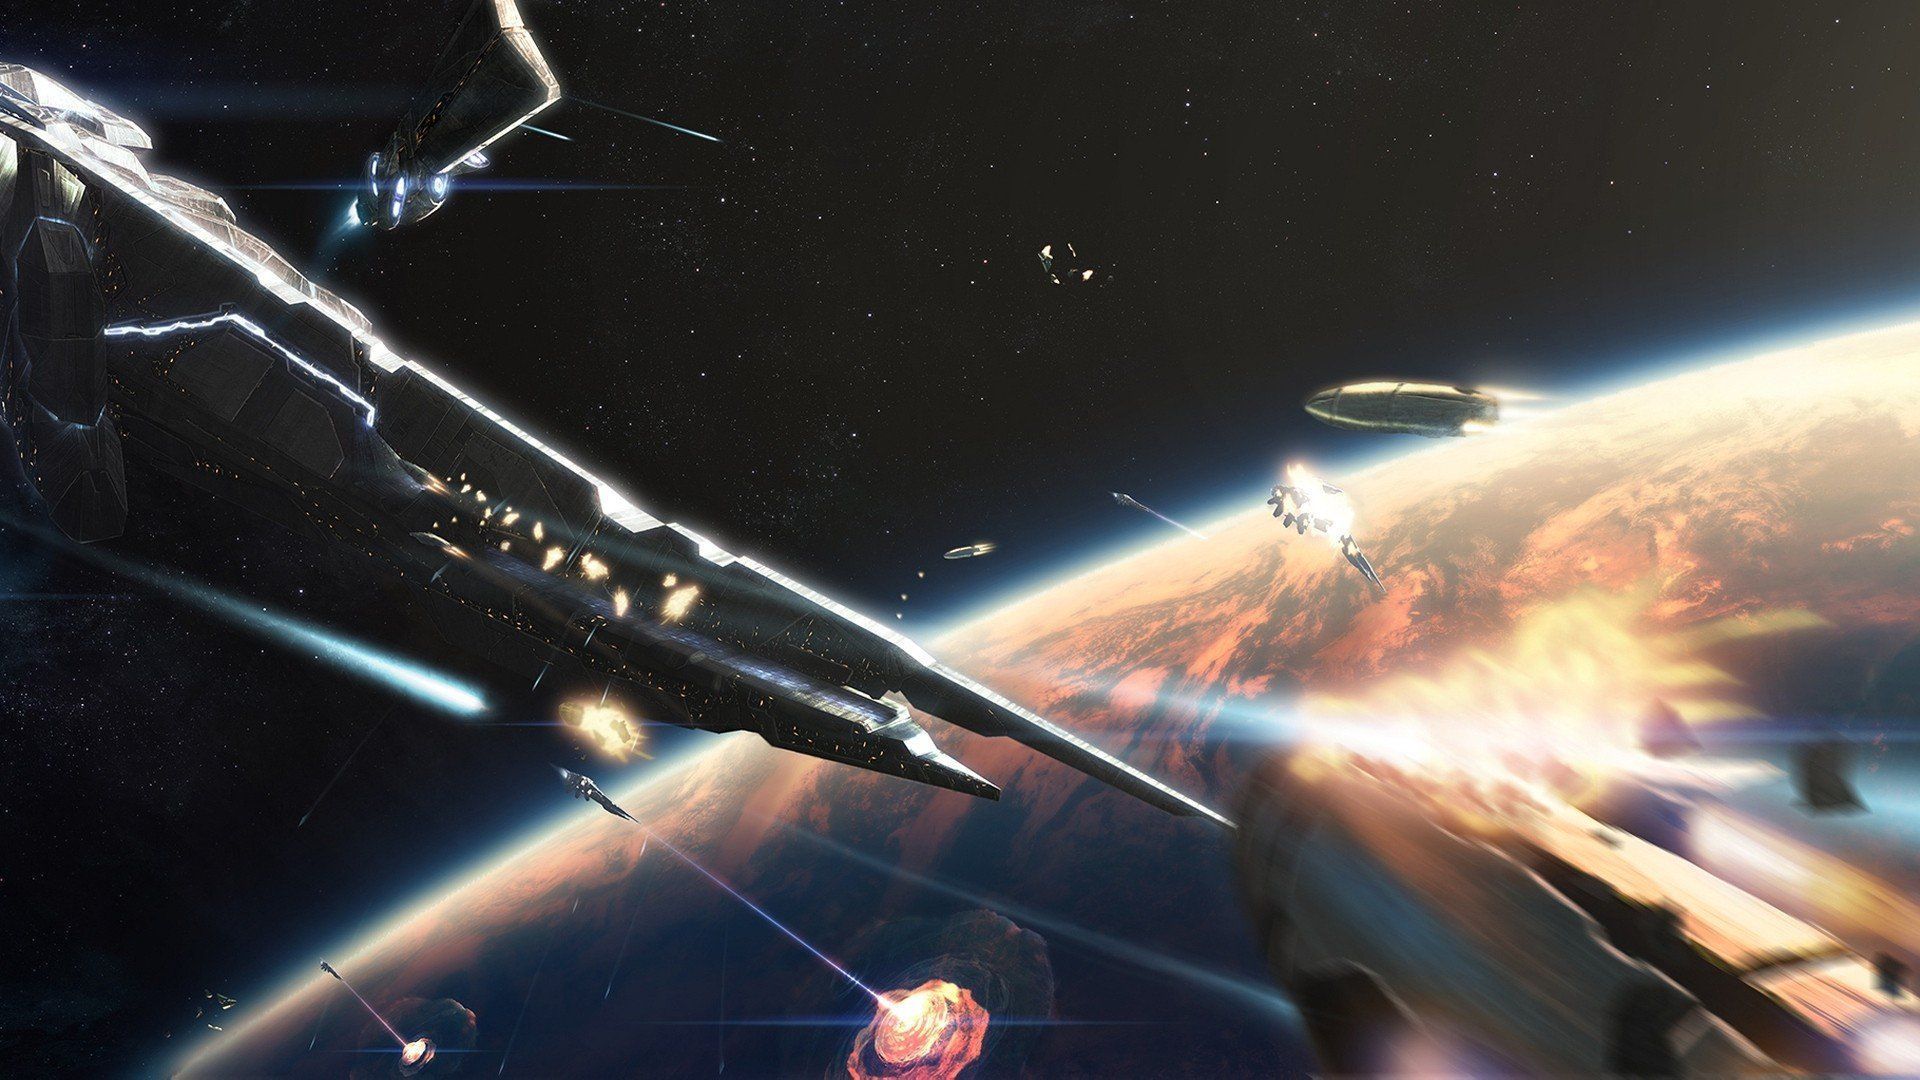 Cool Space Battle Wallpaper. Sci fi wallpaper, Space battles, Futuristic art